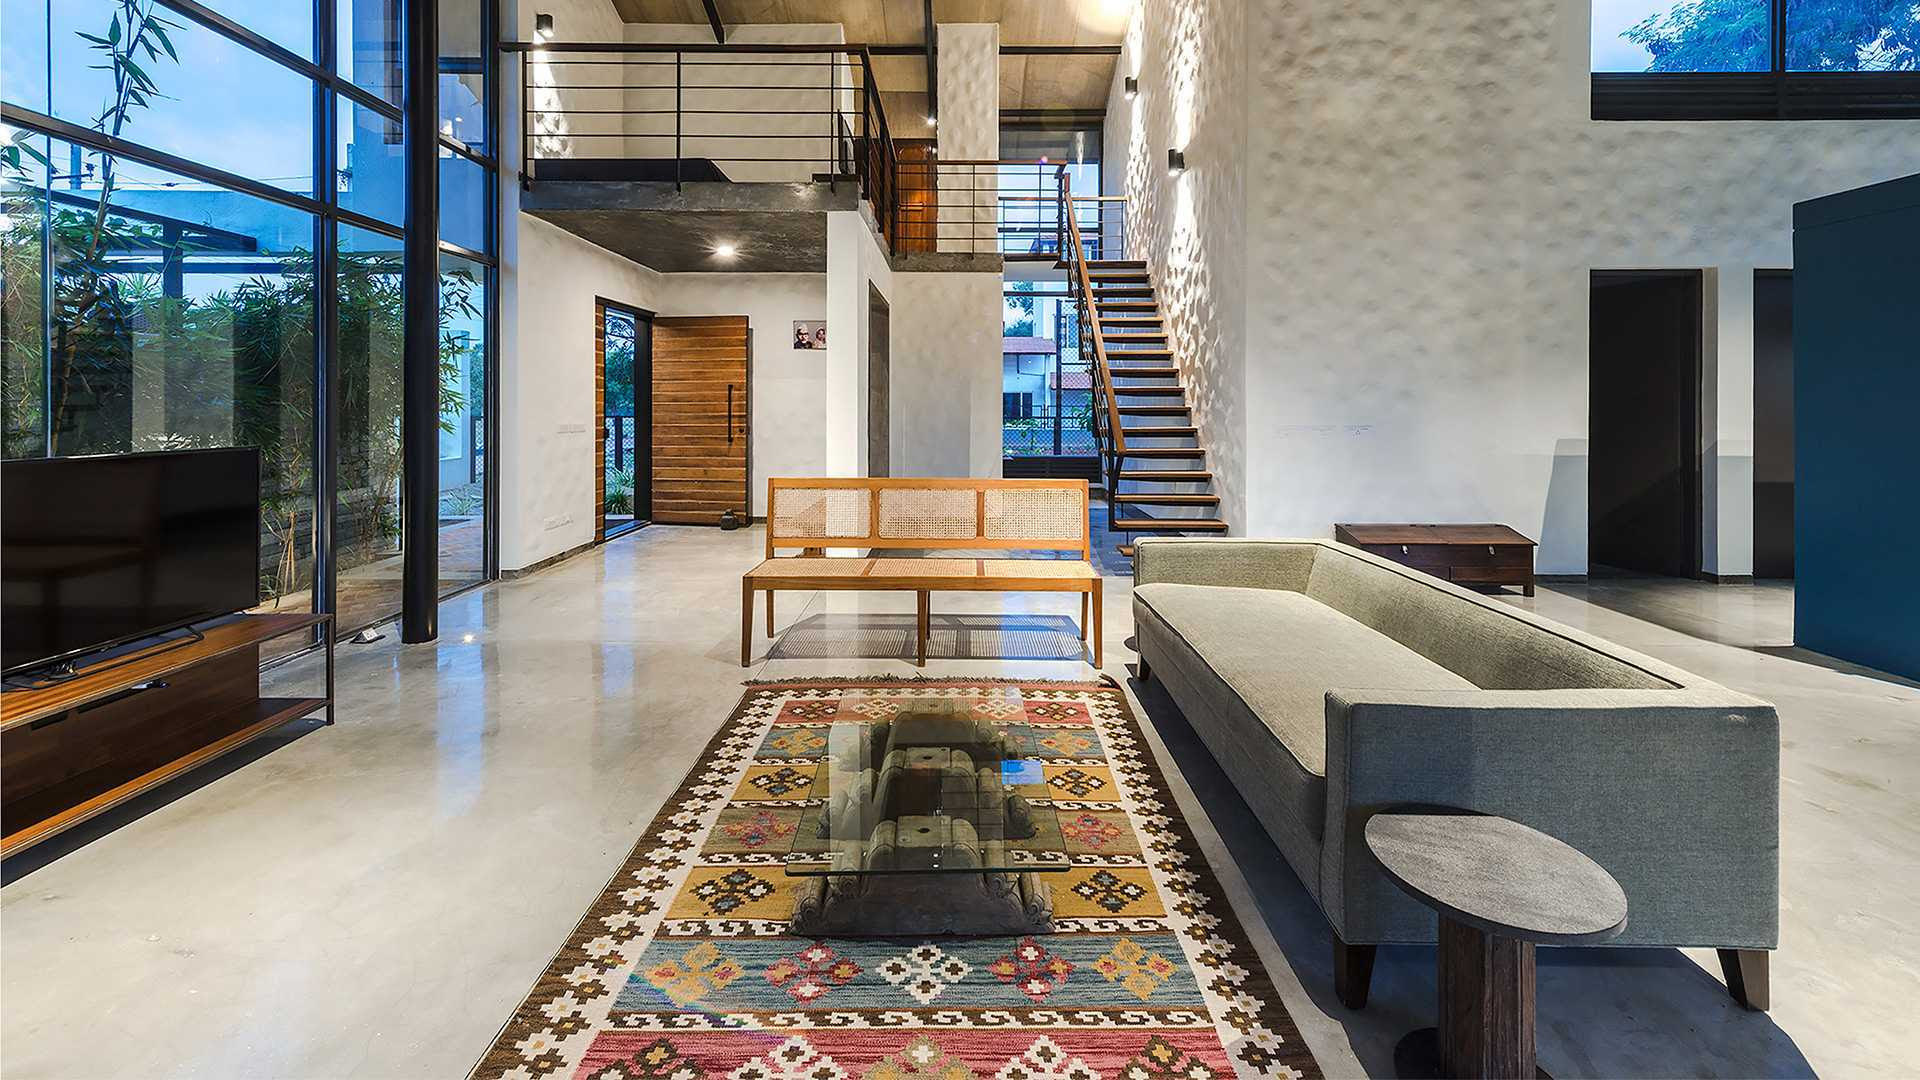 20 Inspirational House Floor Tiles